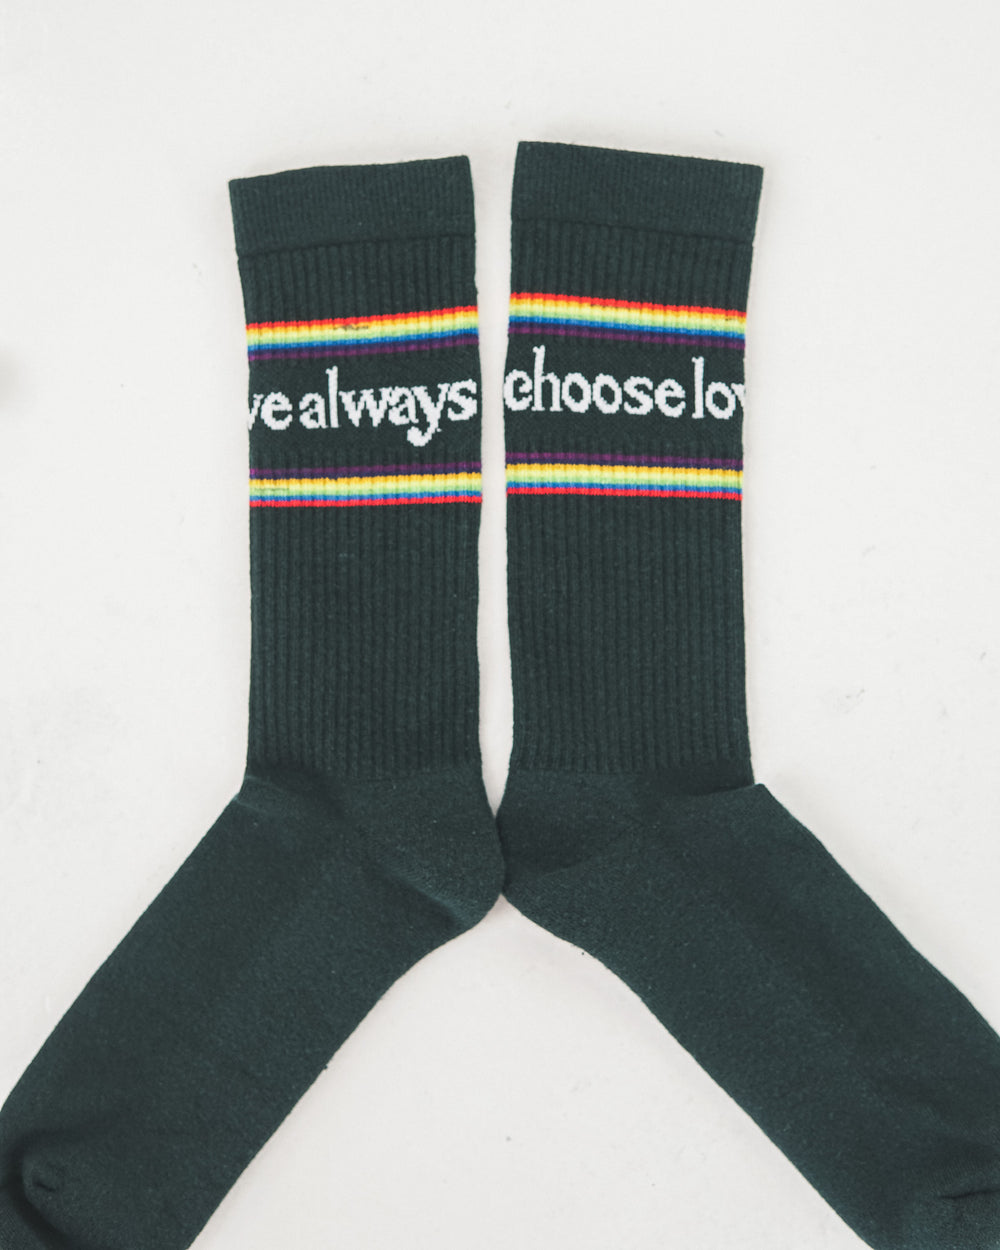 Socken always choose love